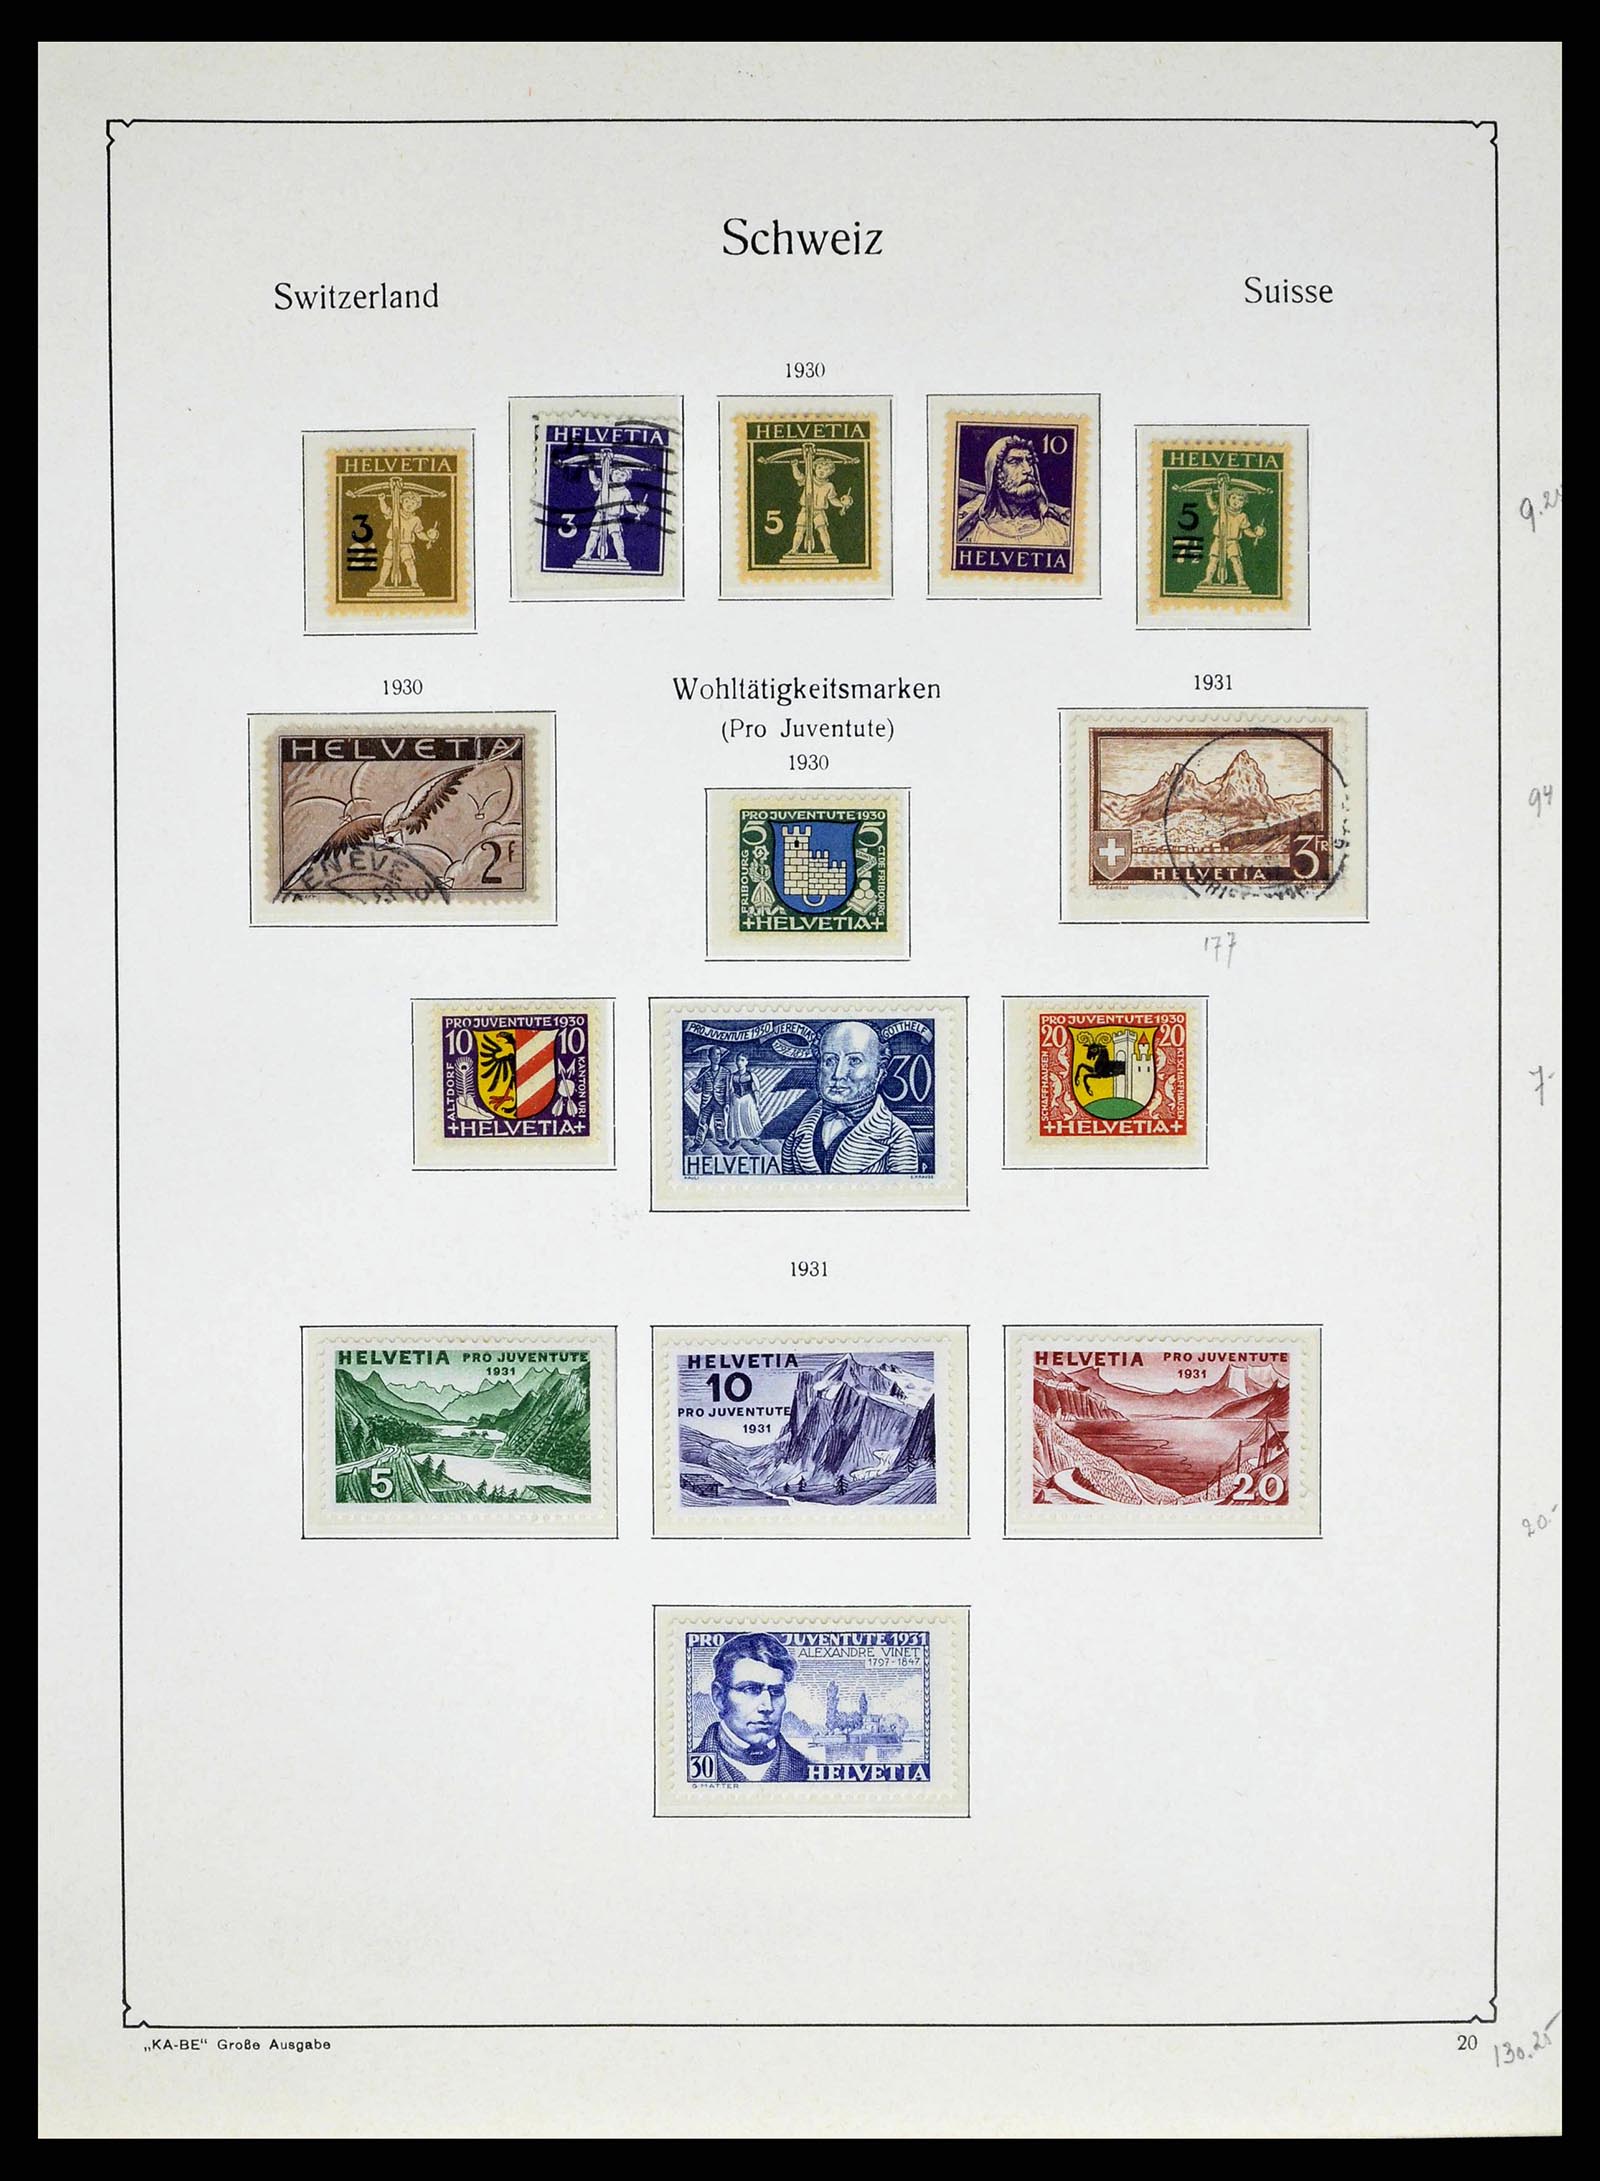 38706 0020 - Stamp collection 38706 Switzerland 1854-1985.